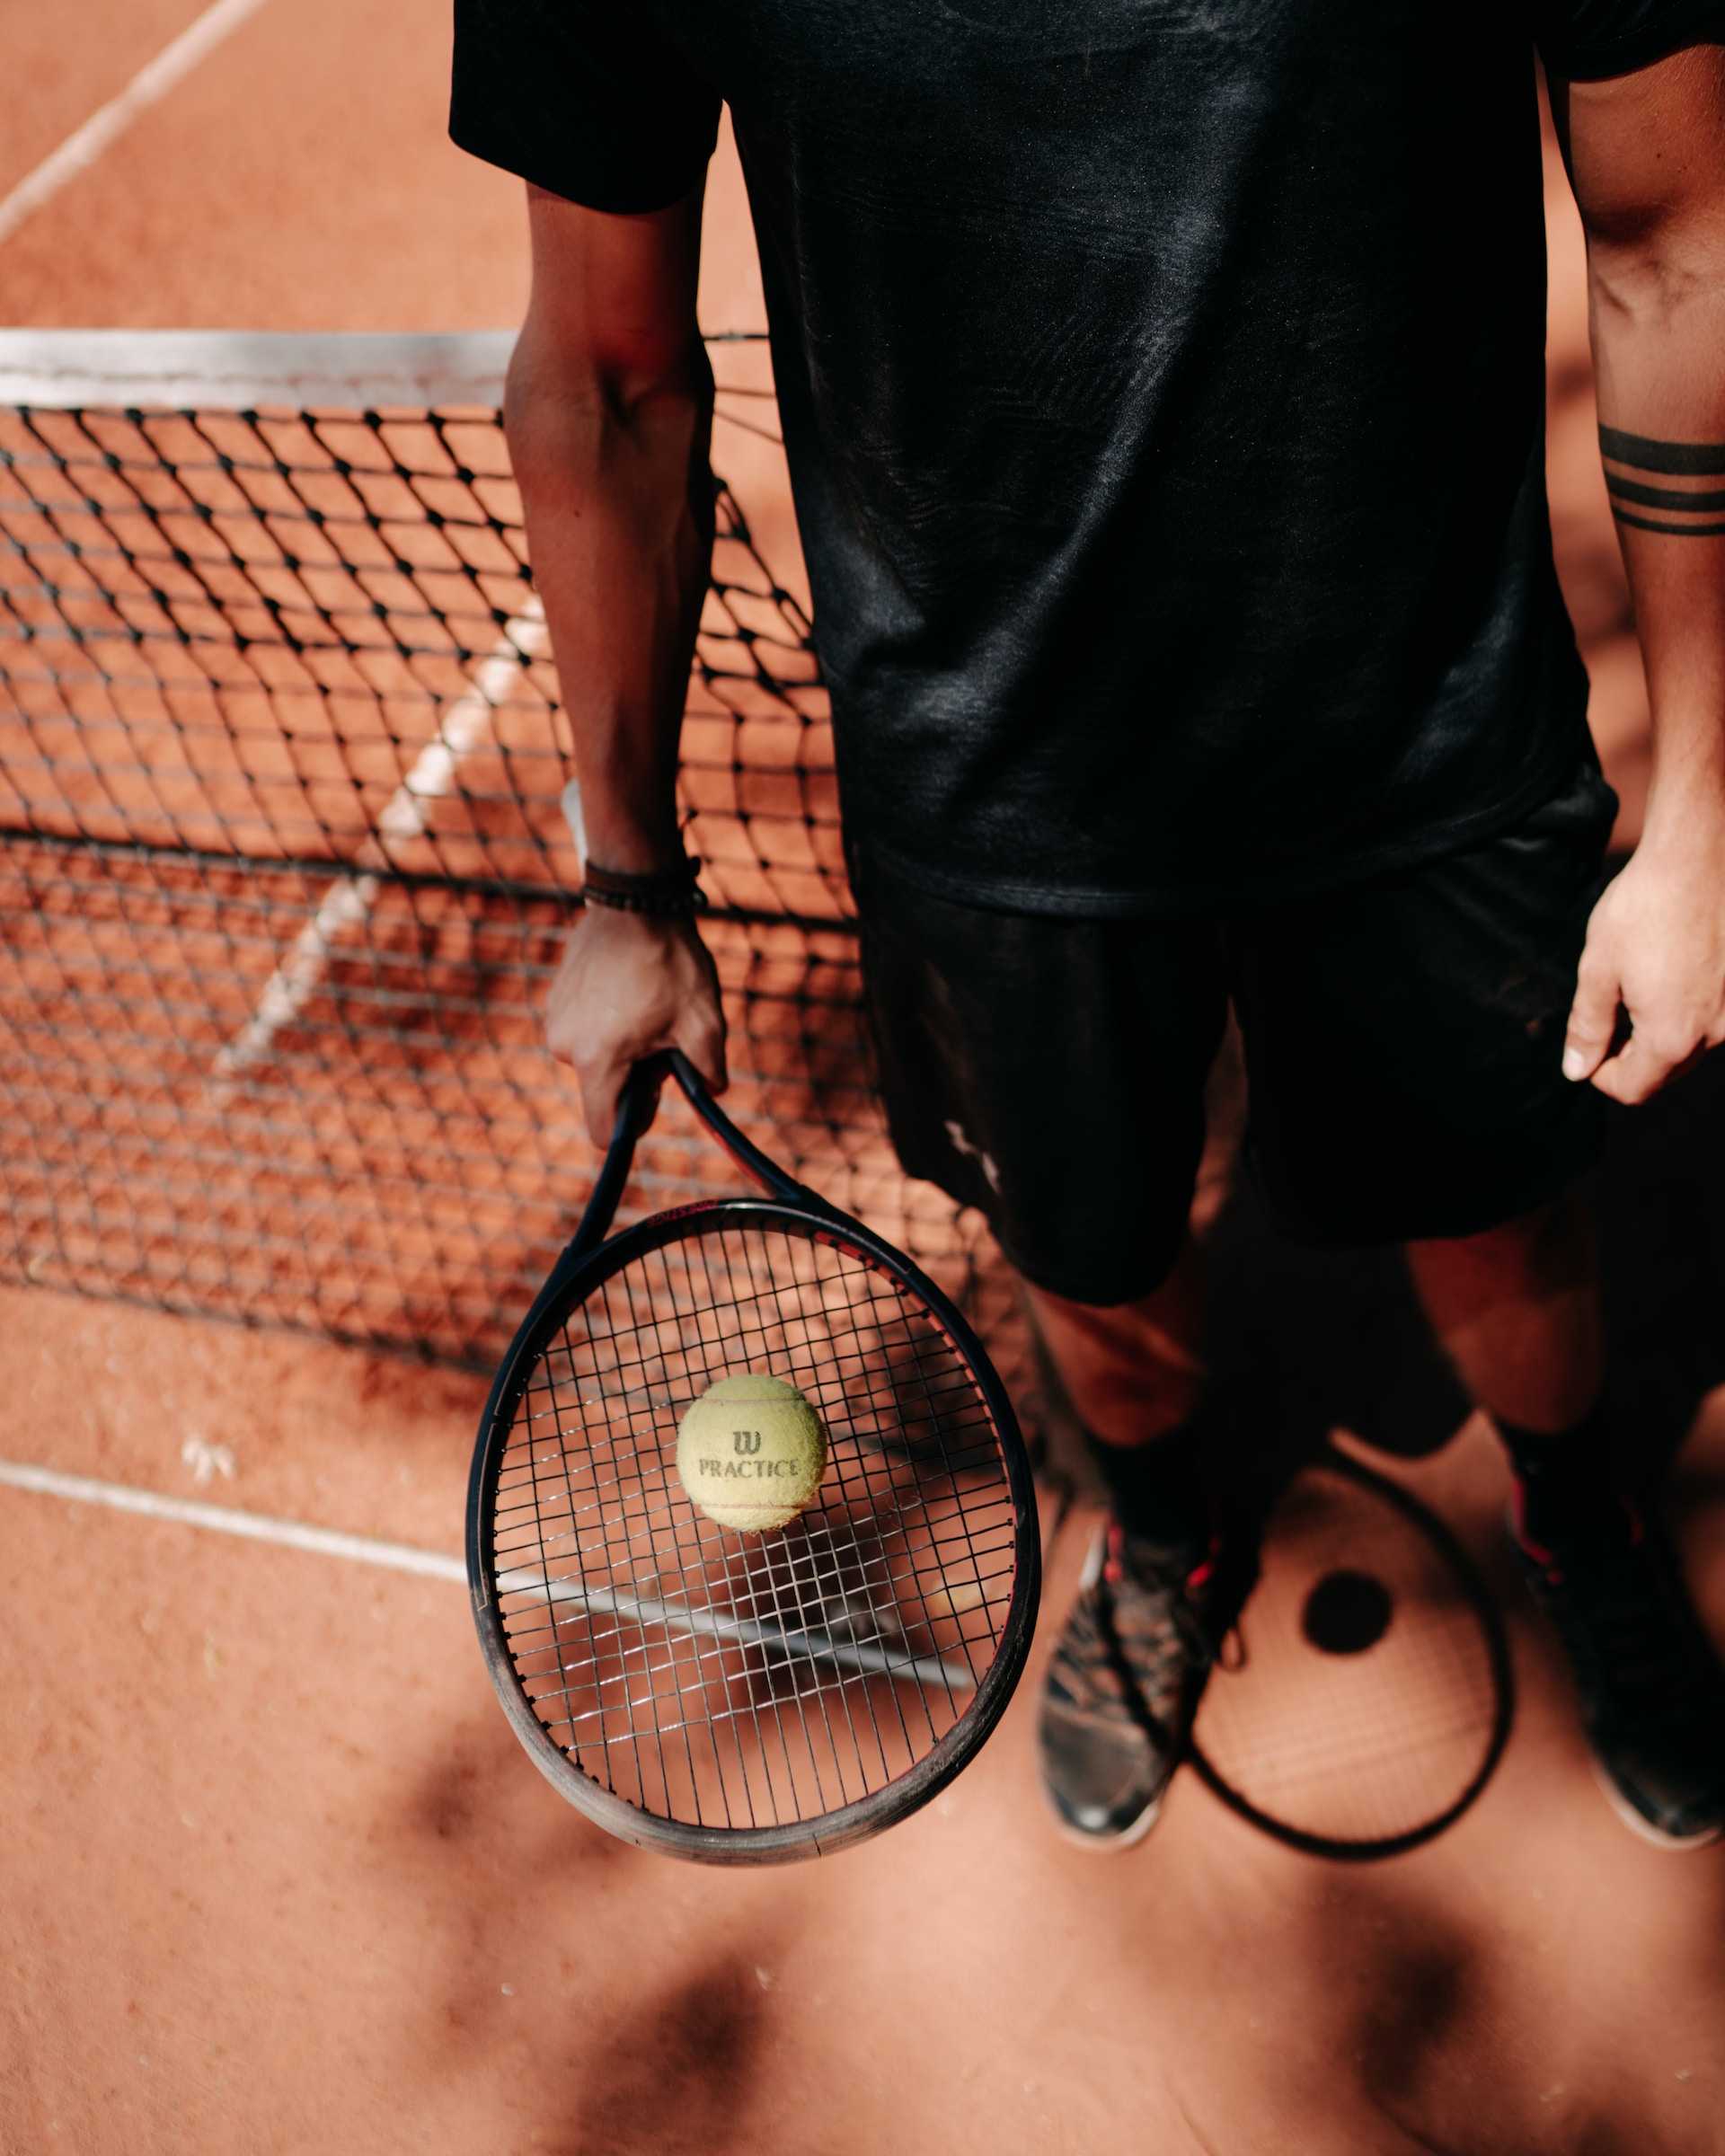 Tennis Techniques – An Overview